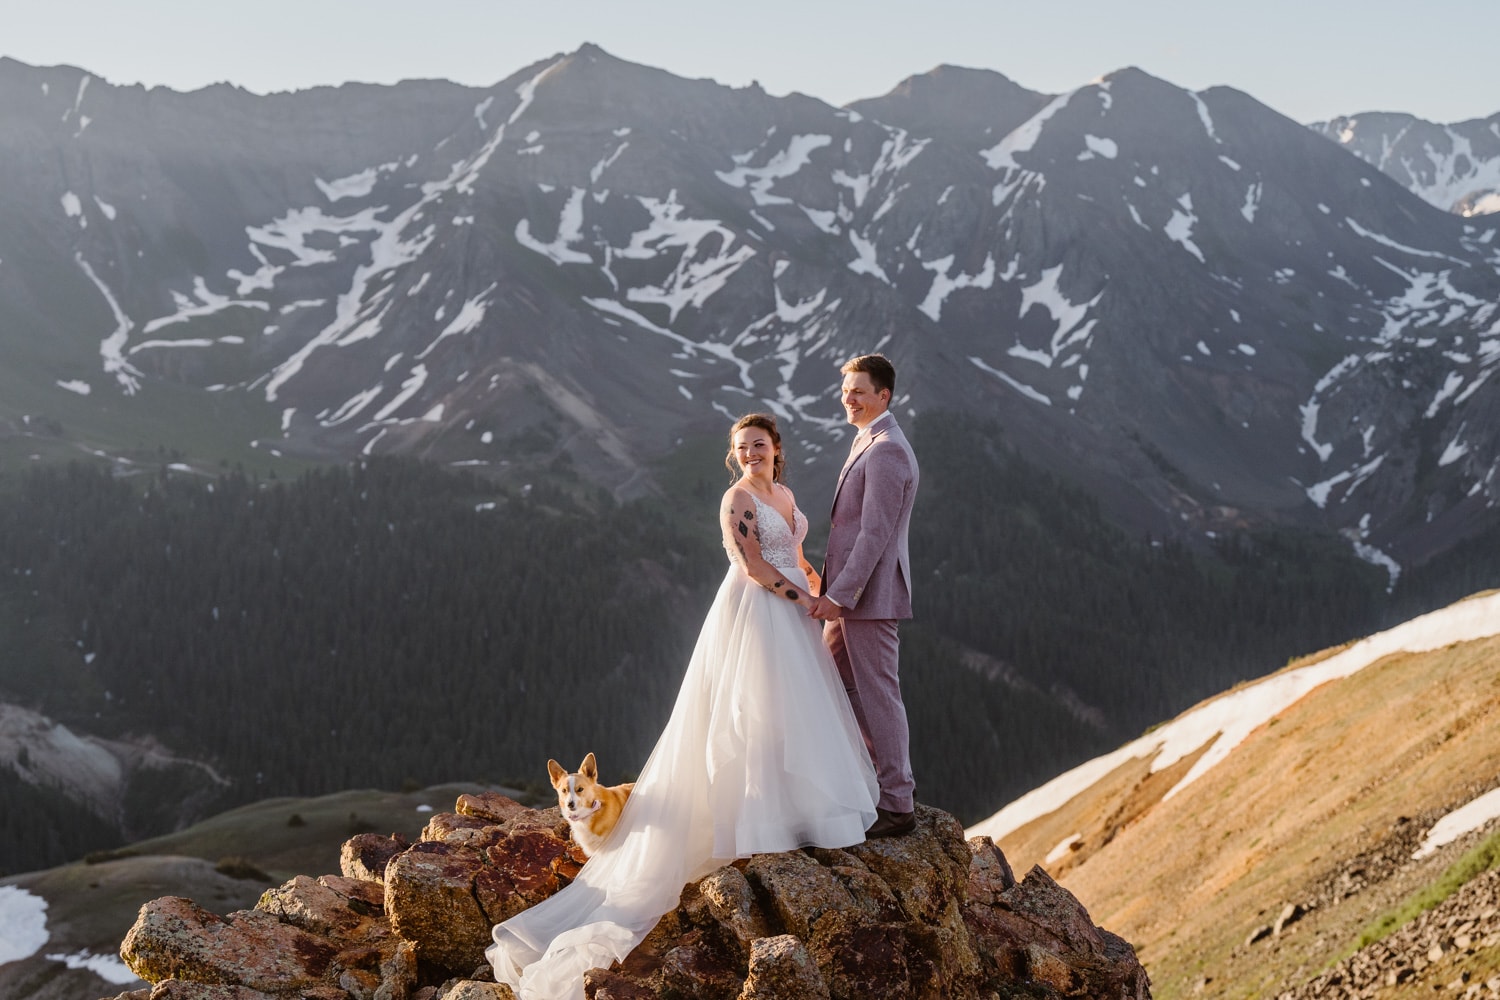 A couple with their corgi in the mountains for their Colorado elopement.